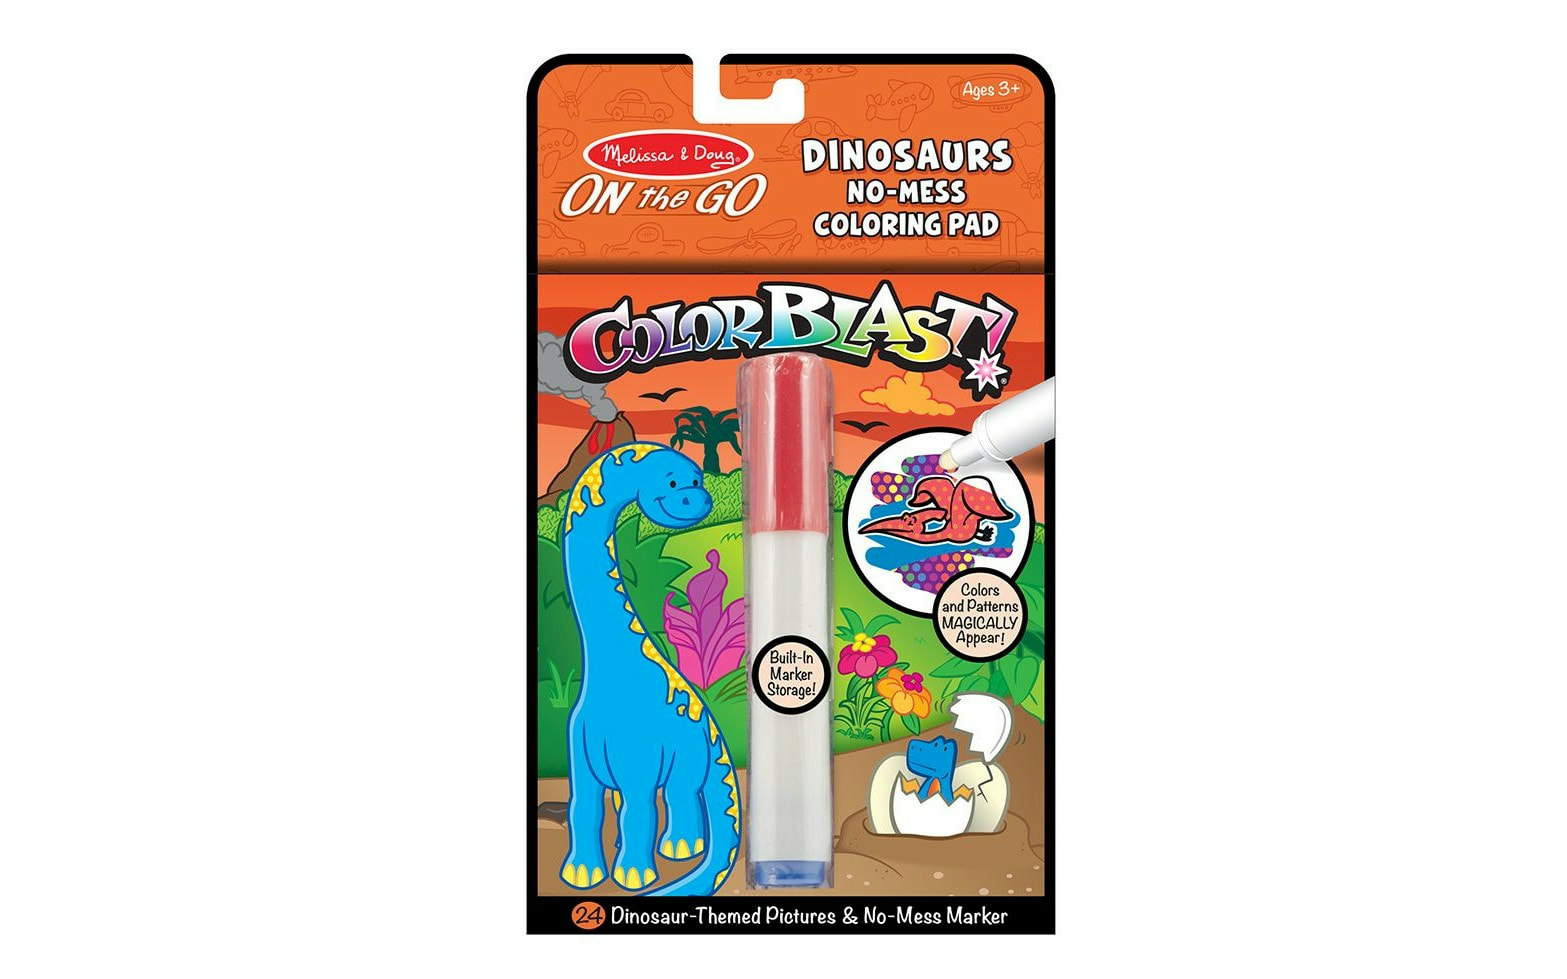 ColorBlast No-Mess Dinosaur Coloring Pad - Melissa & Doug